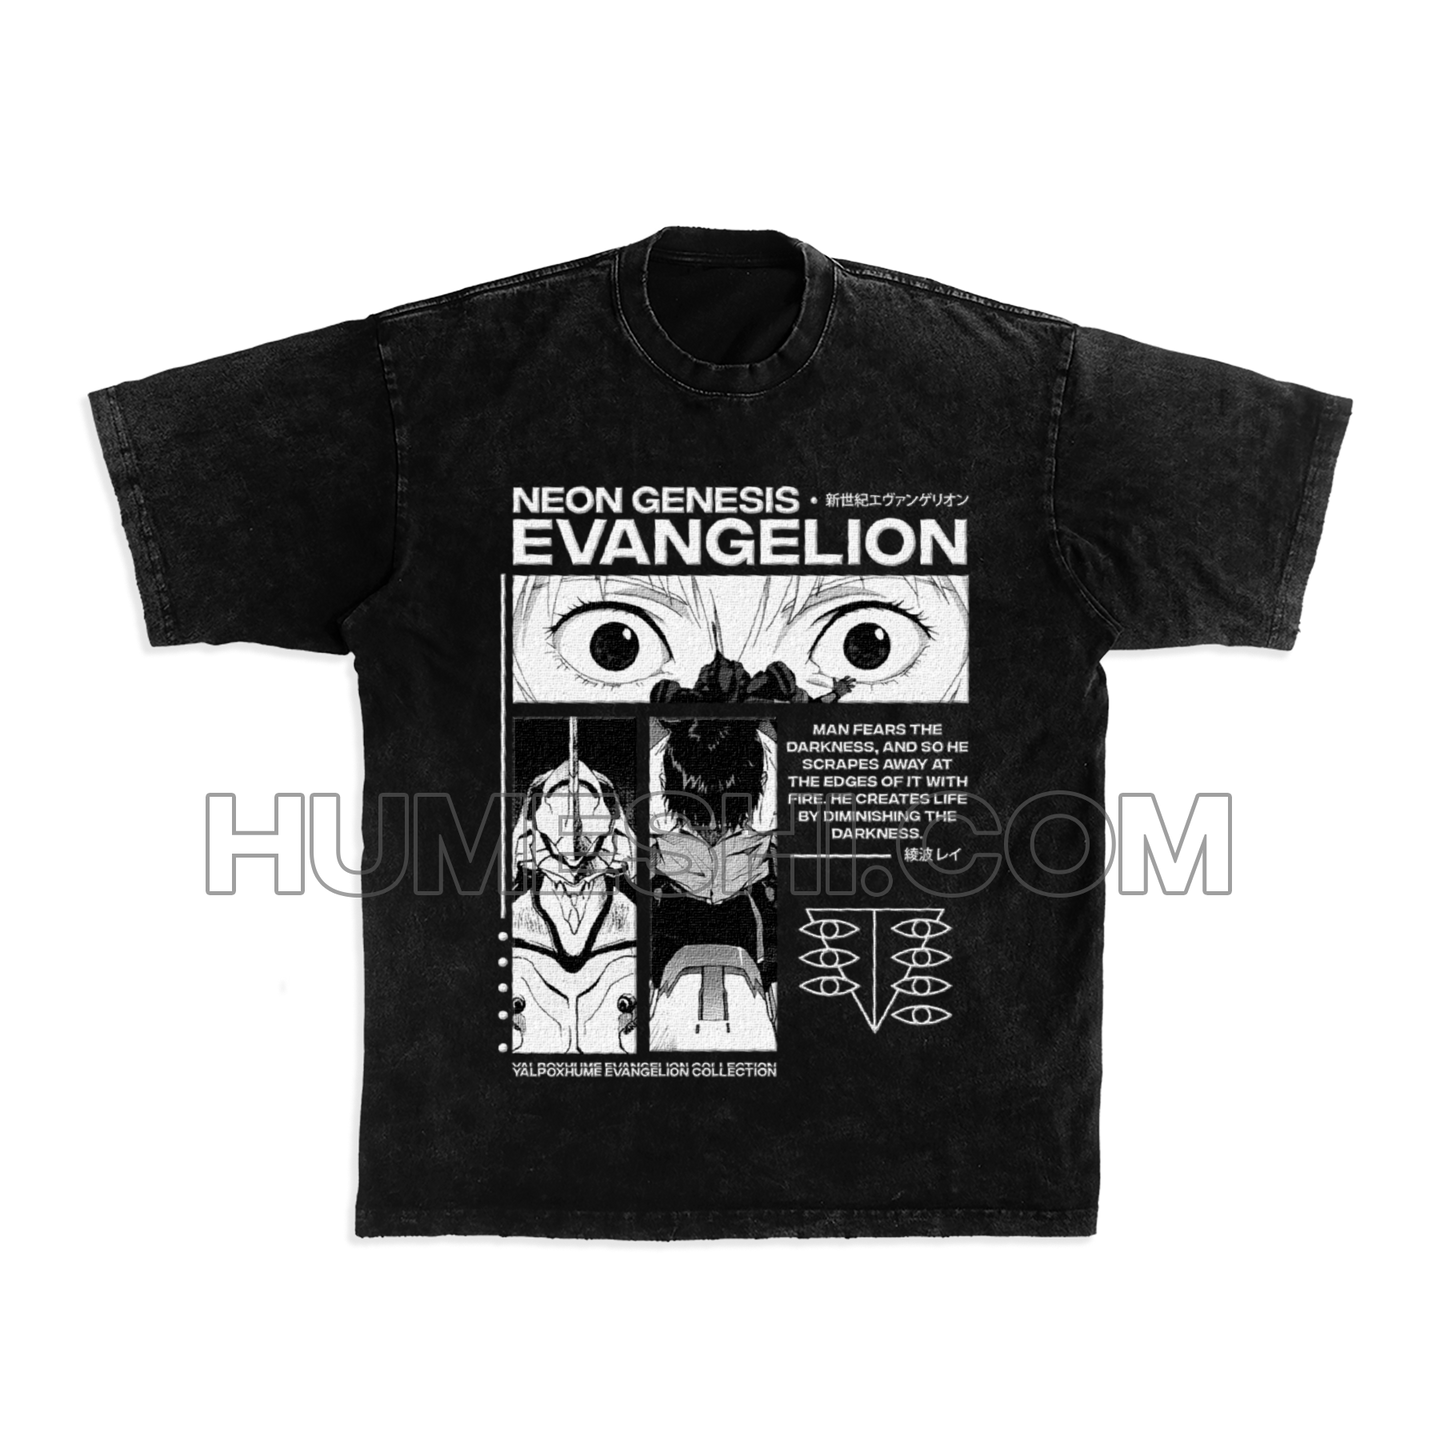 Neon Genesis Evangelion HM-X.04 Shirt